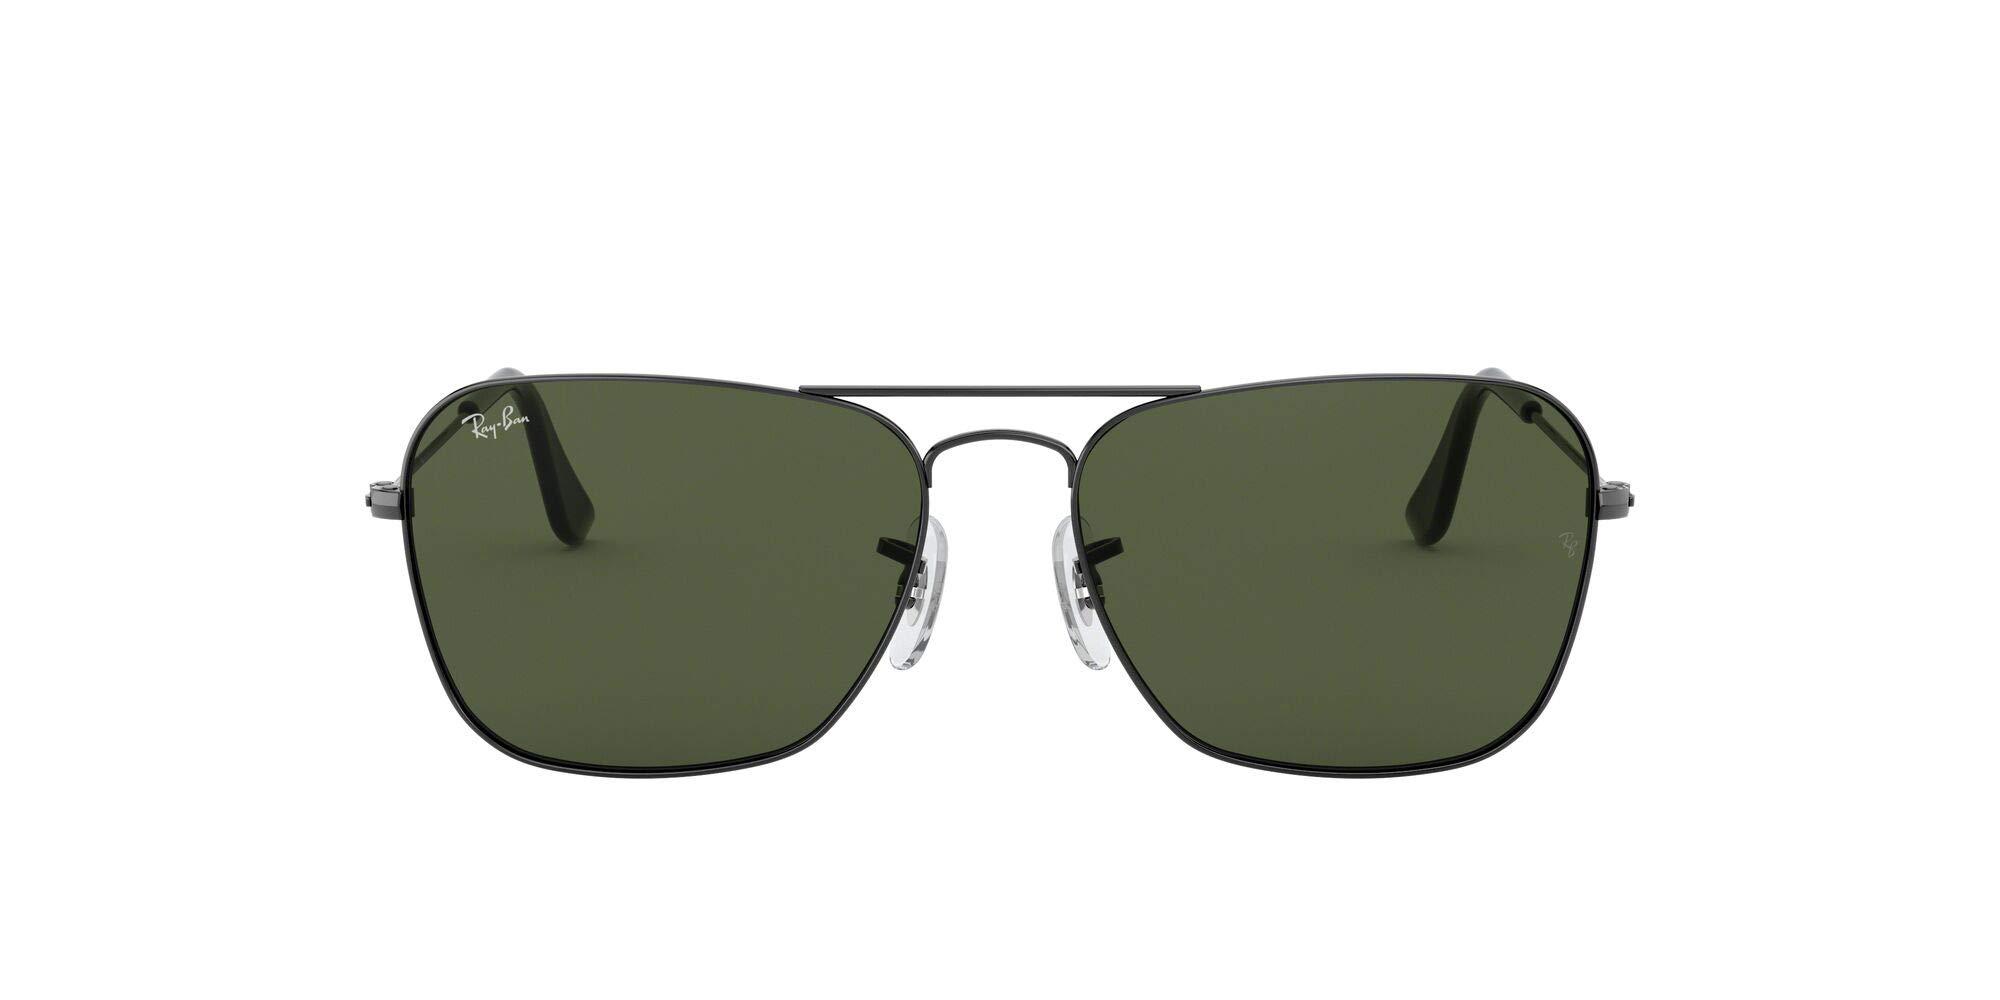 Ray-Ban Rb3136 Caravan Square Sunglasses, Gunmetal/green, 58 Mm - Save 38%  - Lyst